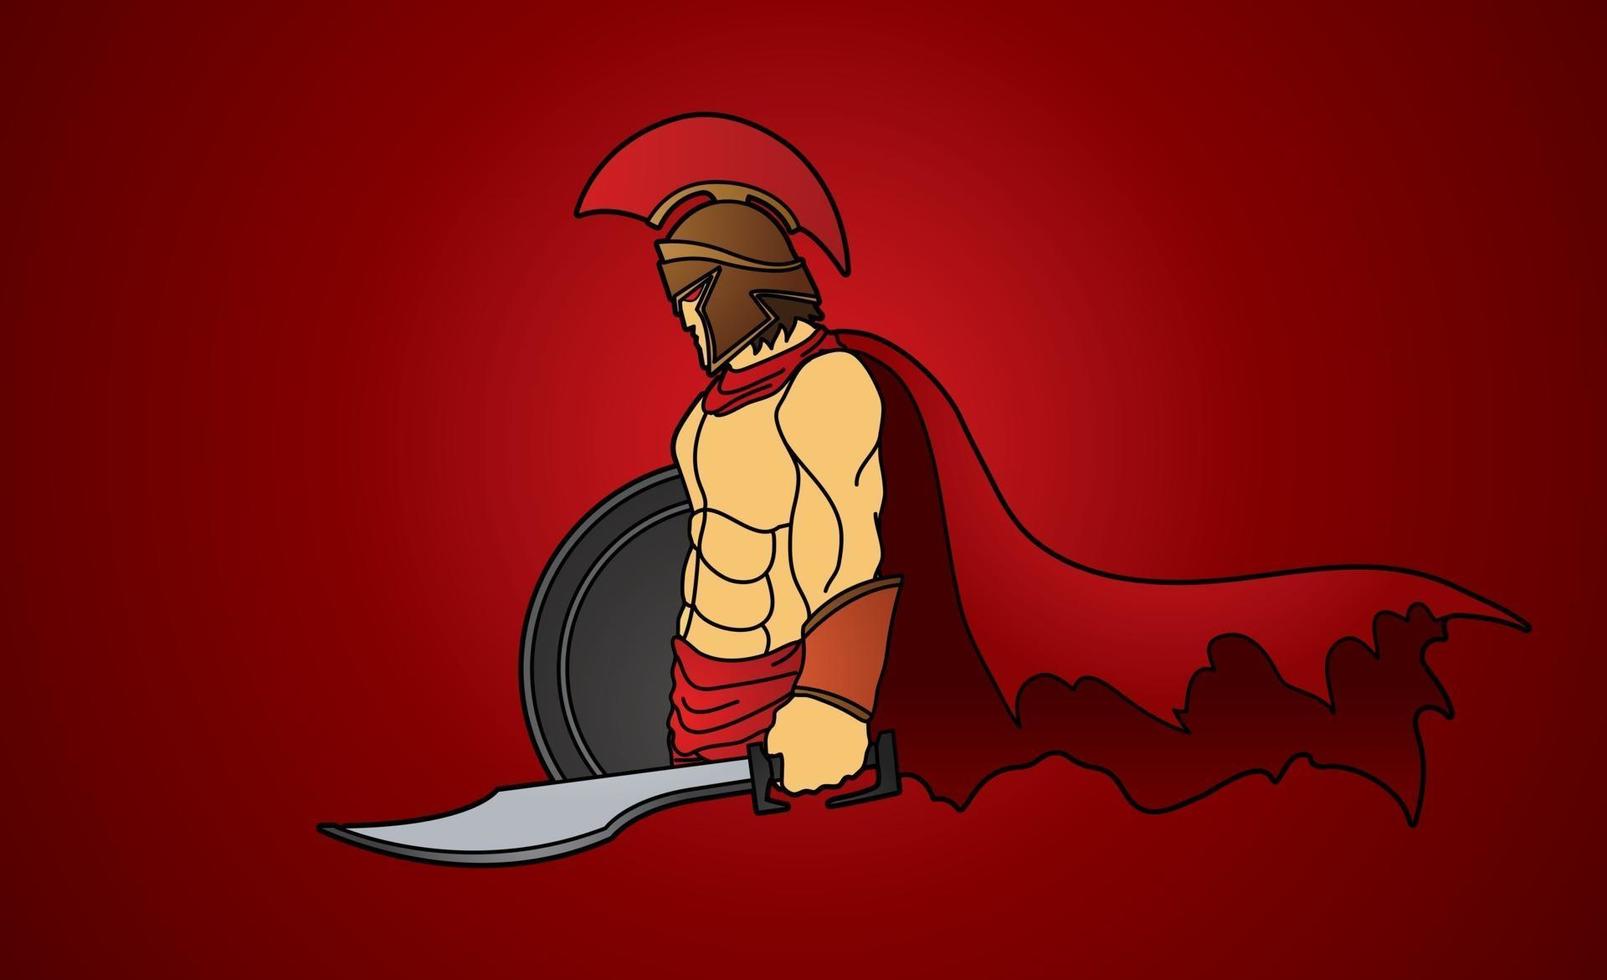 Spartan Warrior Roman or Greek Warrior with Sword vector